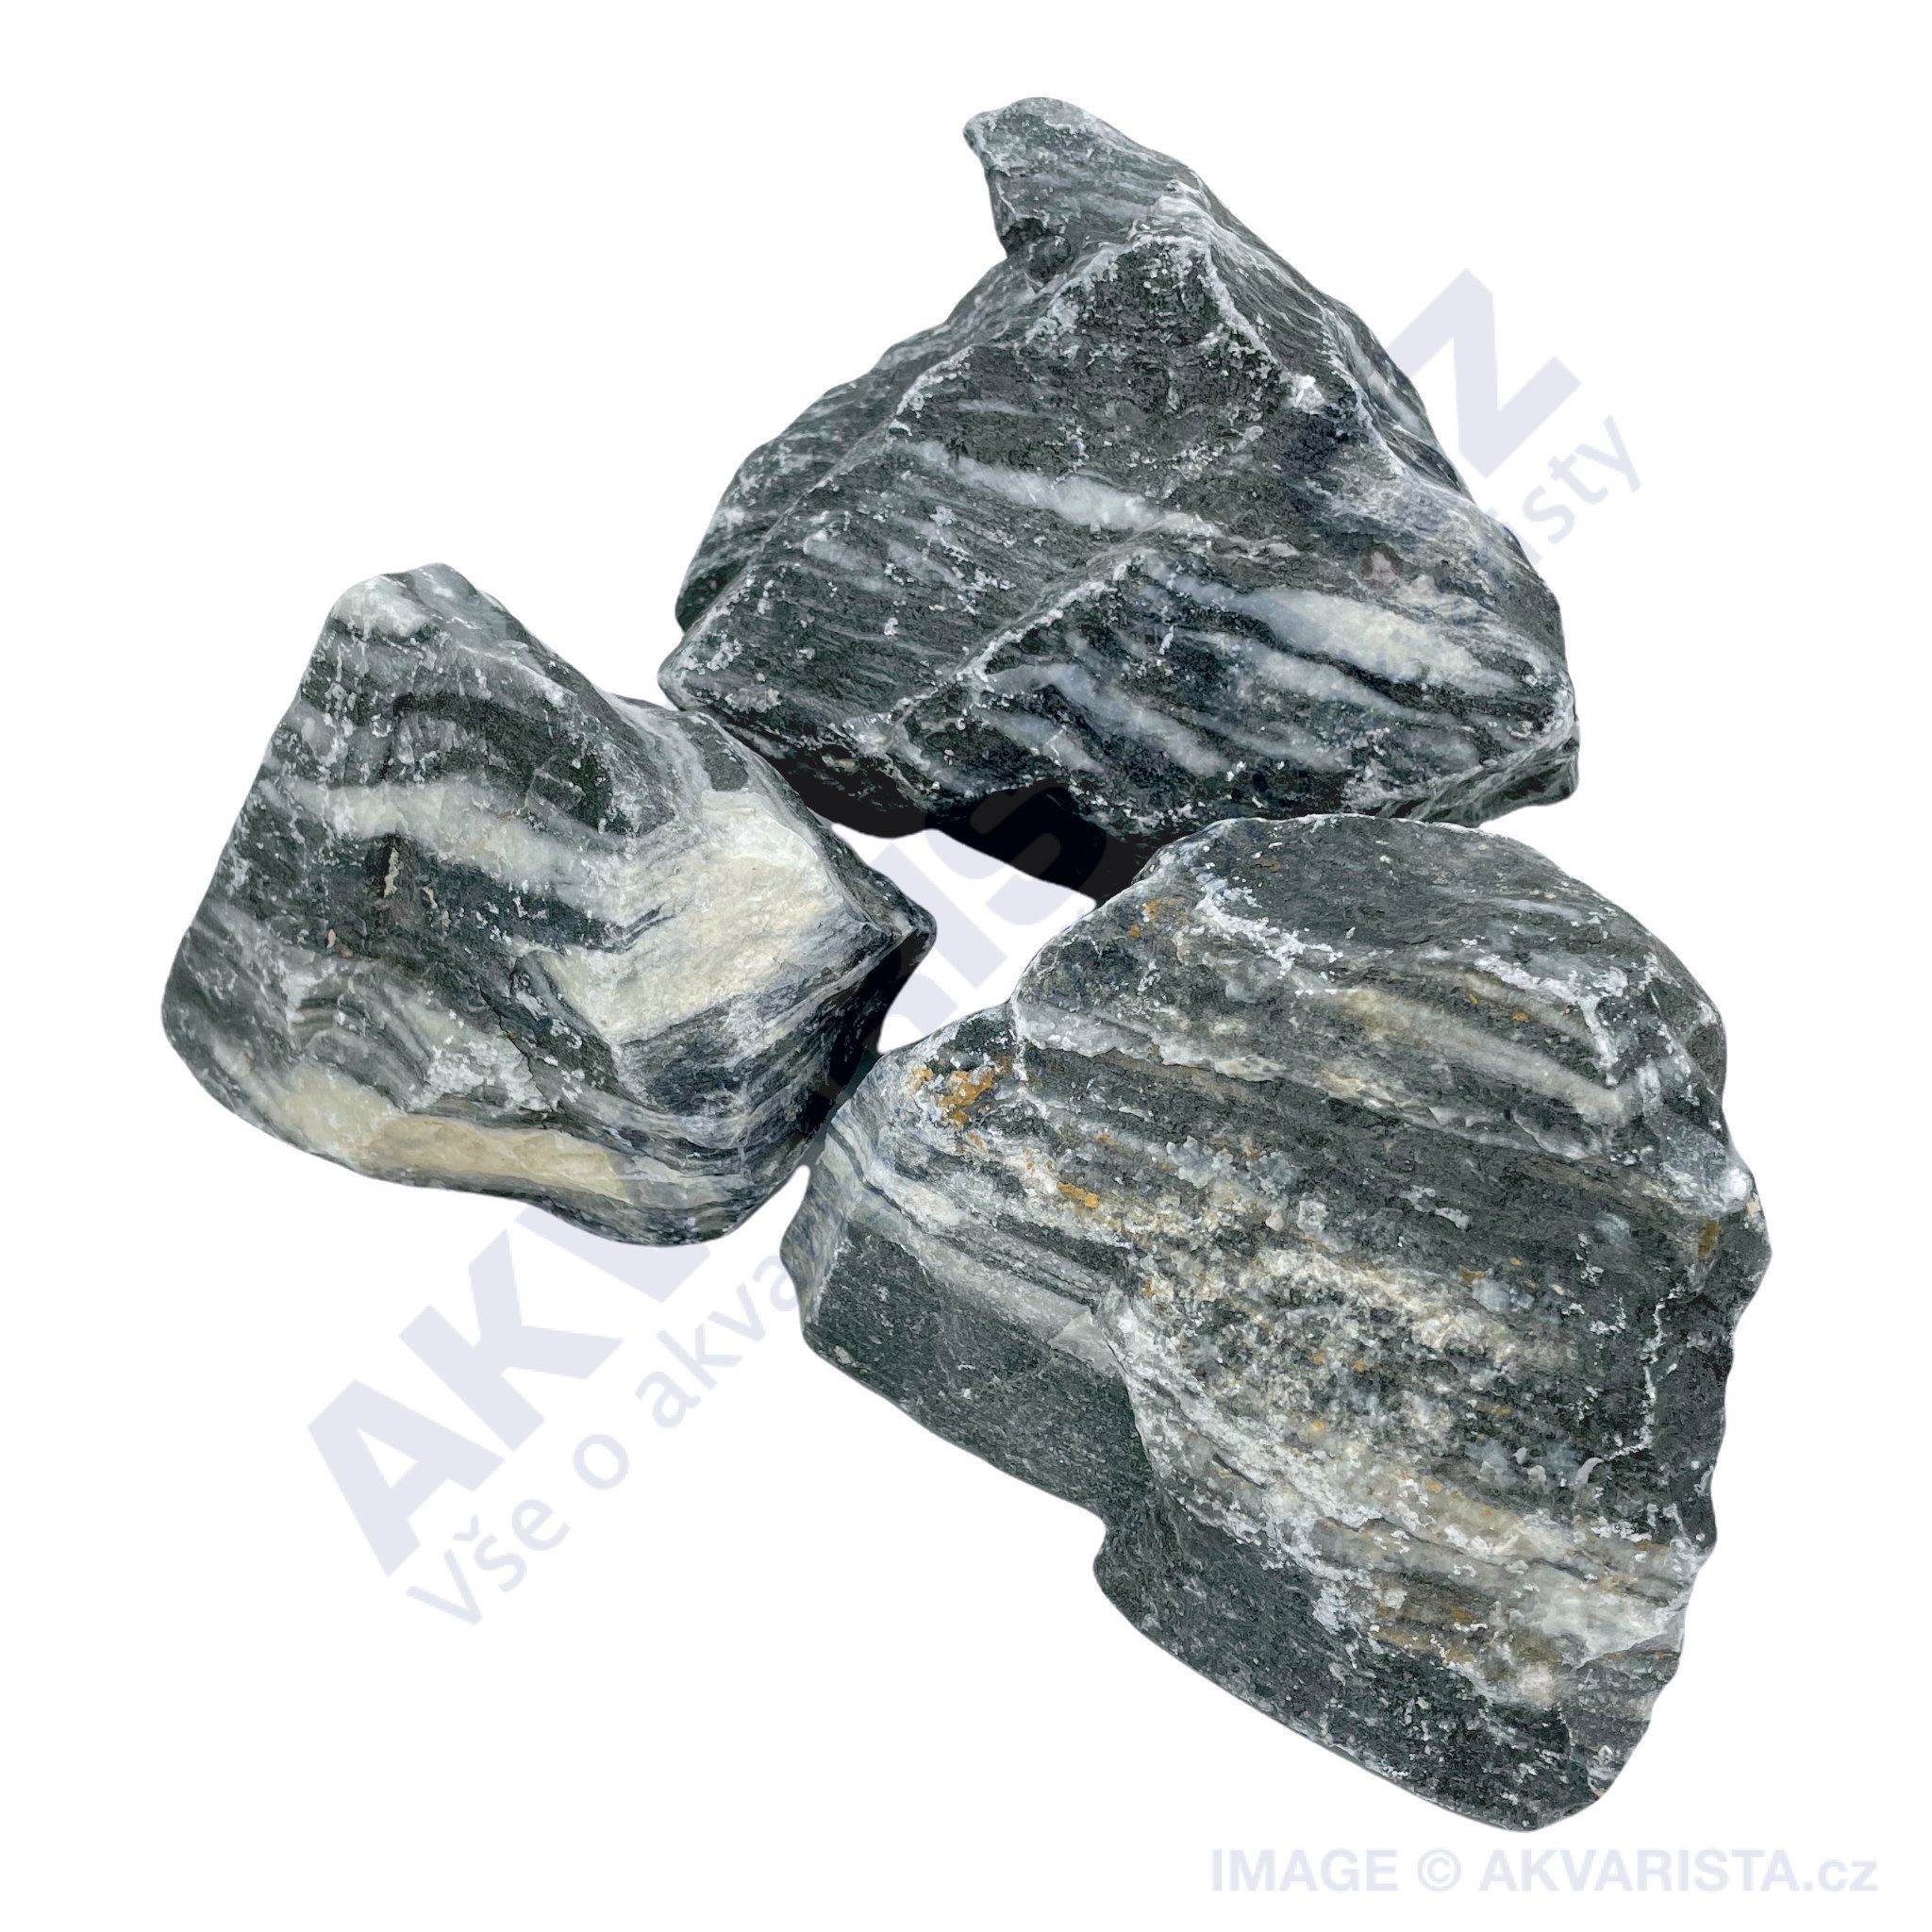 Black and White stones (kg)